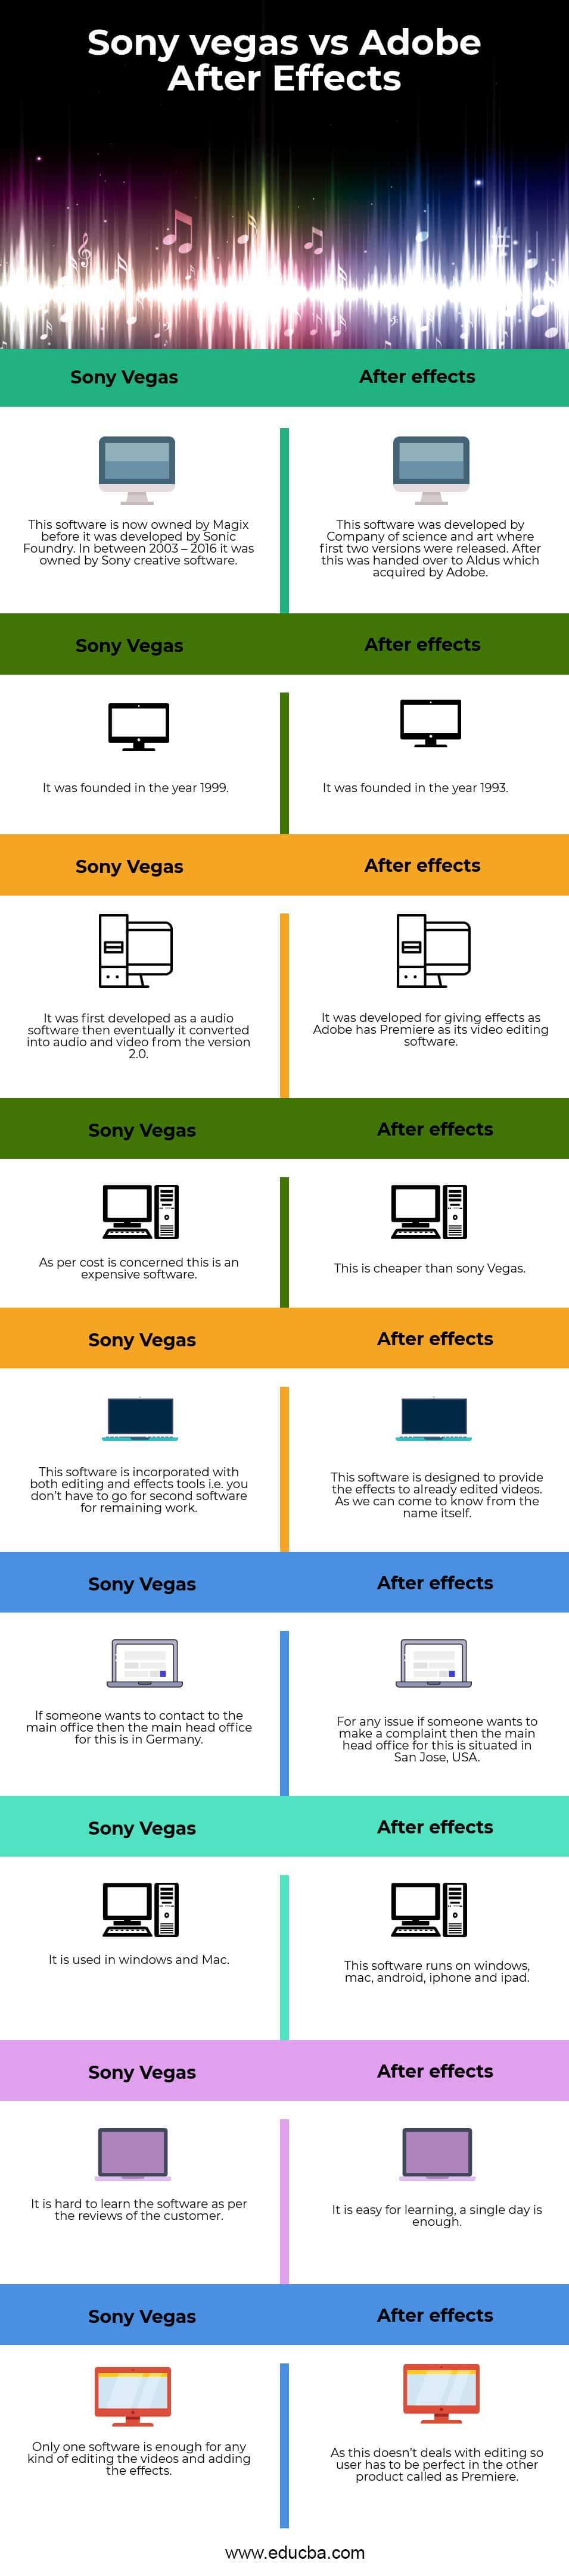 Sony-vegas-vs-Adobe-After-Effects